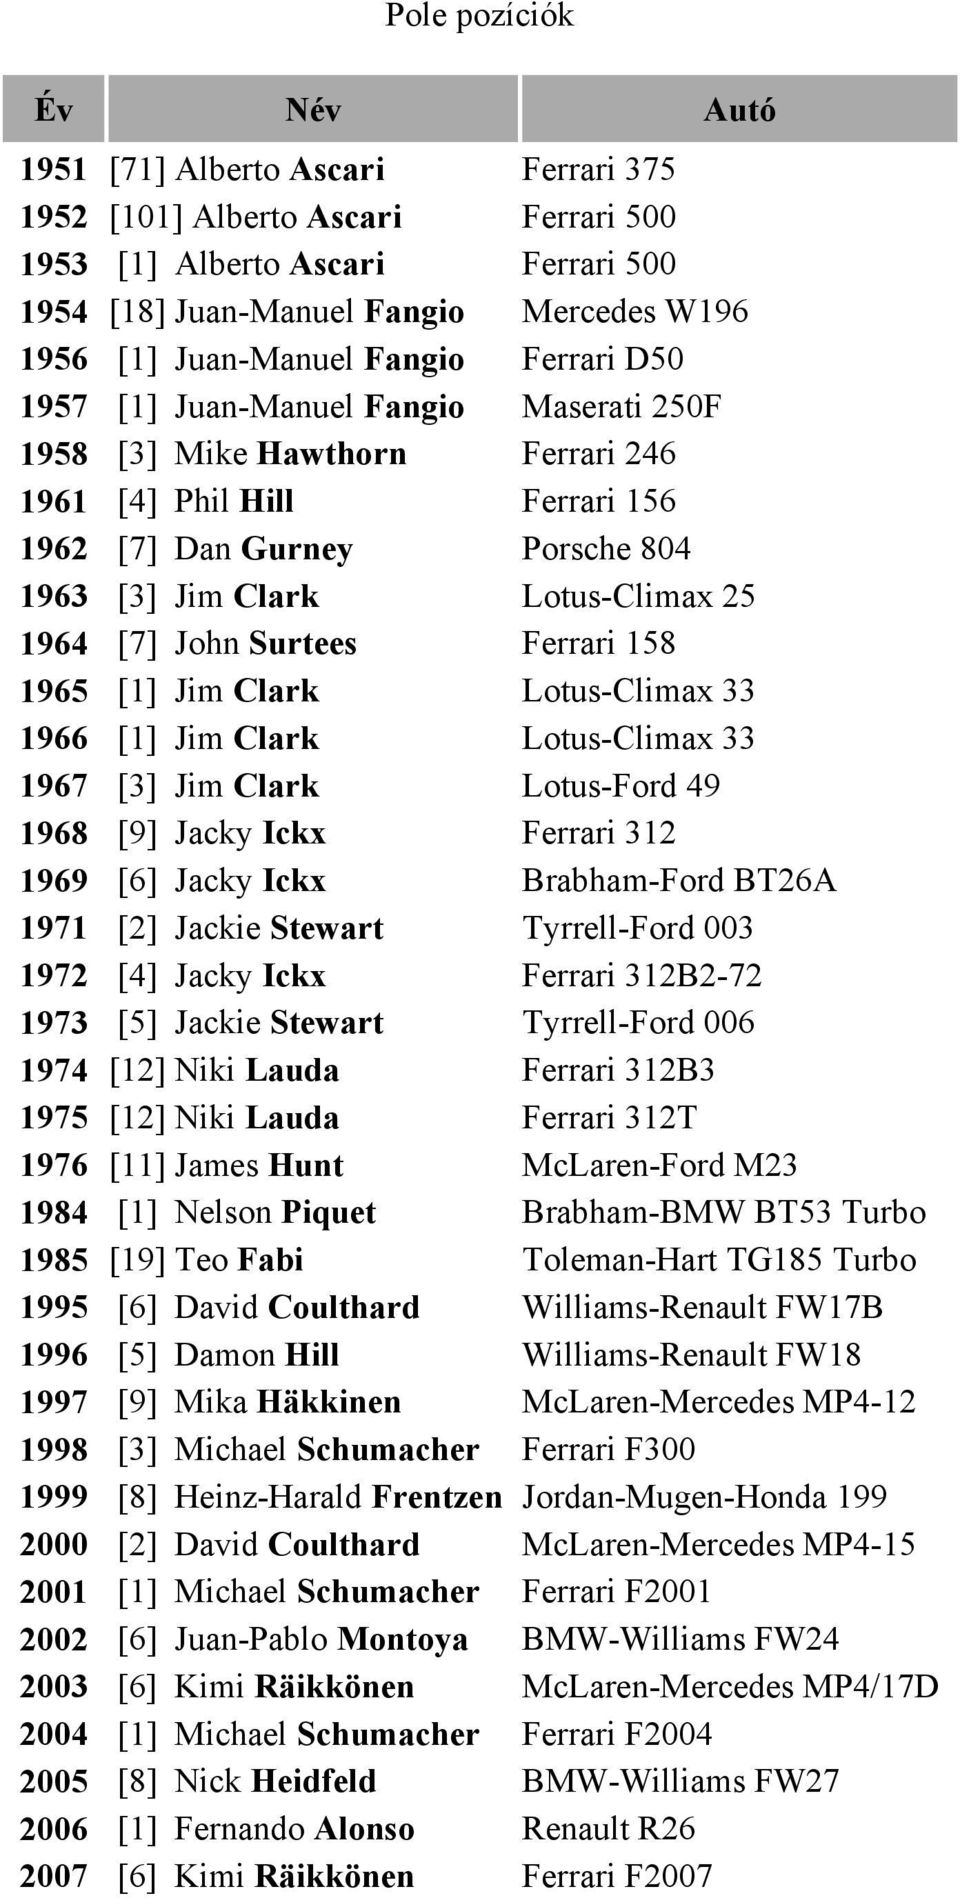 Lotus-Climax 25 1964 [7] John Surtees Ferrari 158 1965 [1] Jim Clark Lotus-Climax 33 1966 [1] Jim Clark Lotus-Climax 33 1967 [3] Jim Clark Lotus-Ford 49 1968 [9] Jacky Ickx Ferrari 312 1969 [6] Jacky